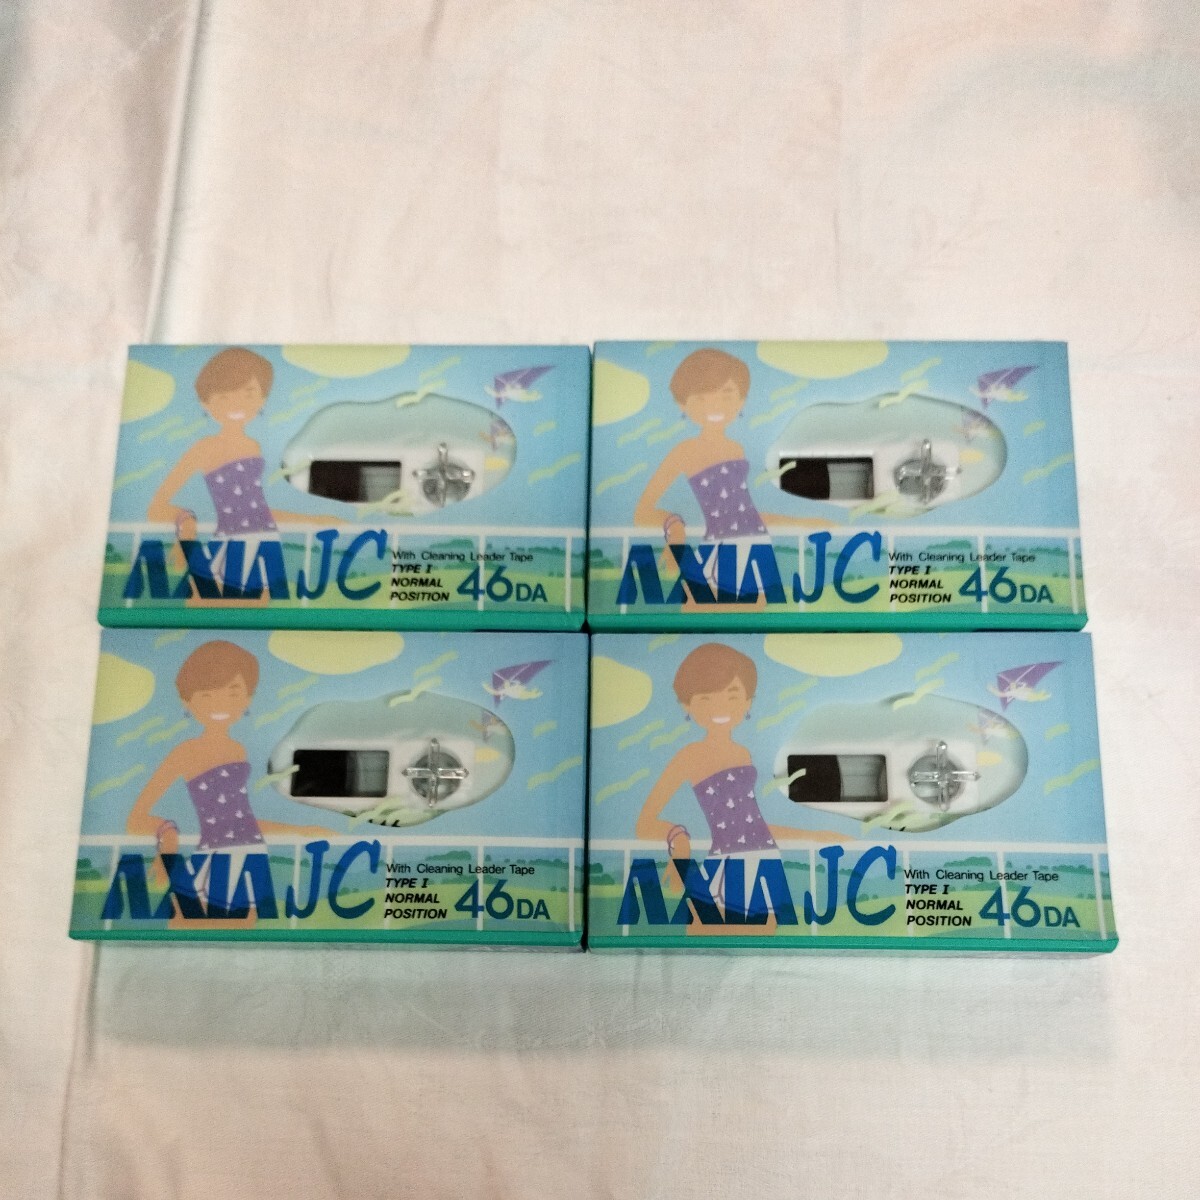 AXIA JC 46DA カセットテープ 富士写真フイルム まとめの画像1